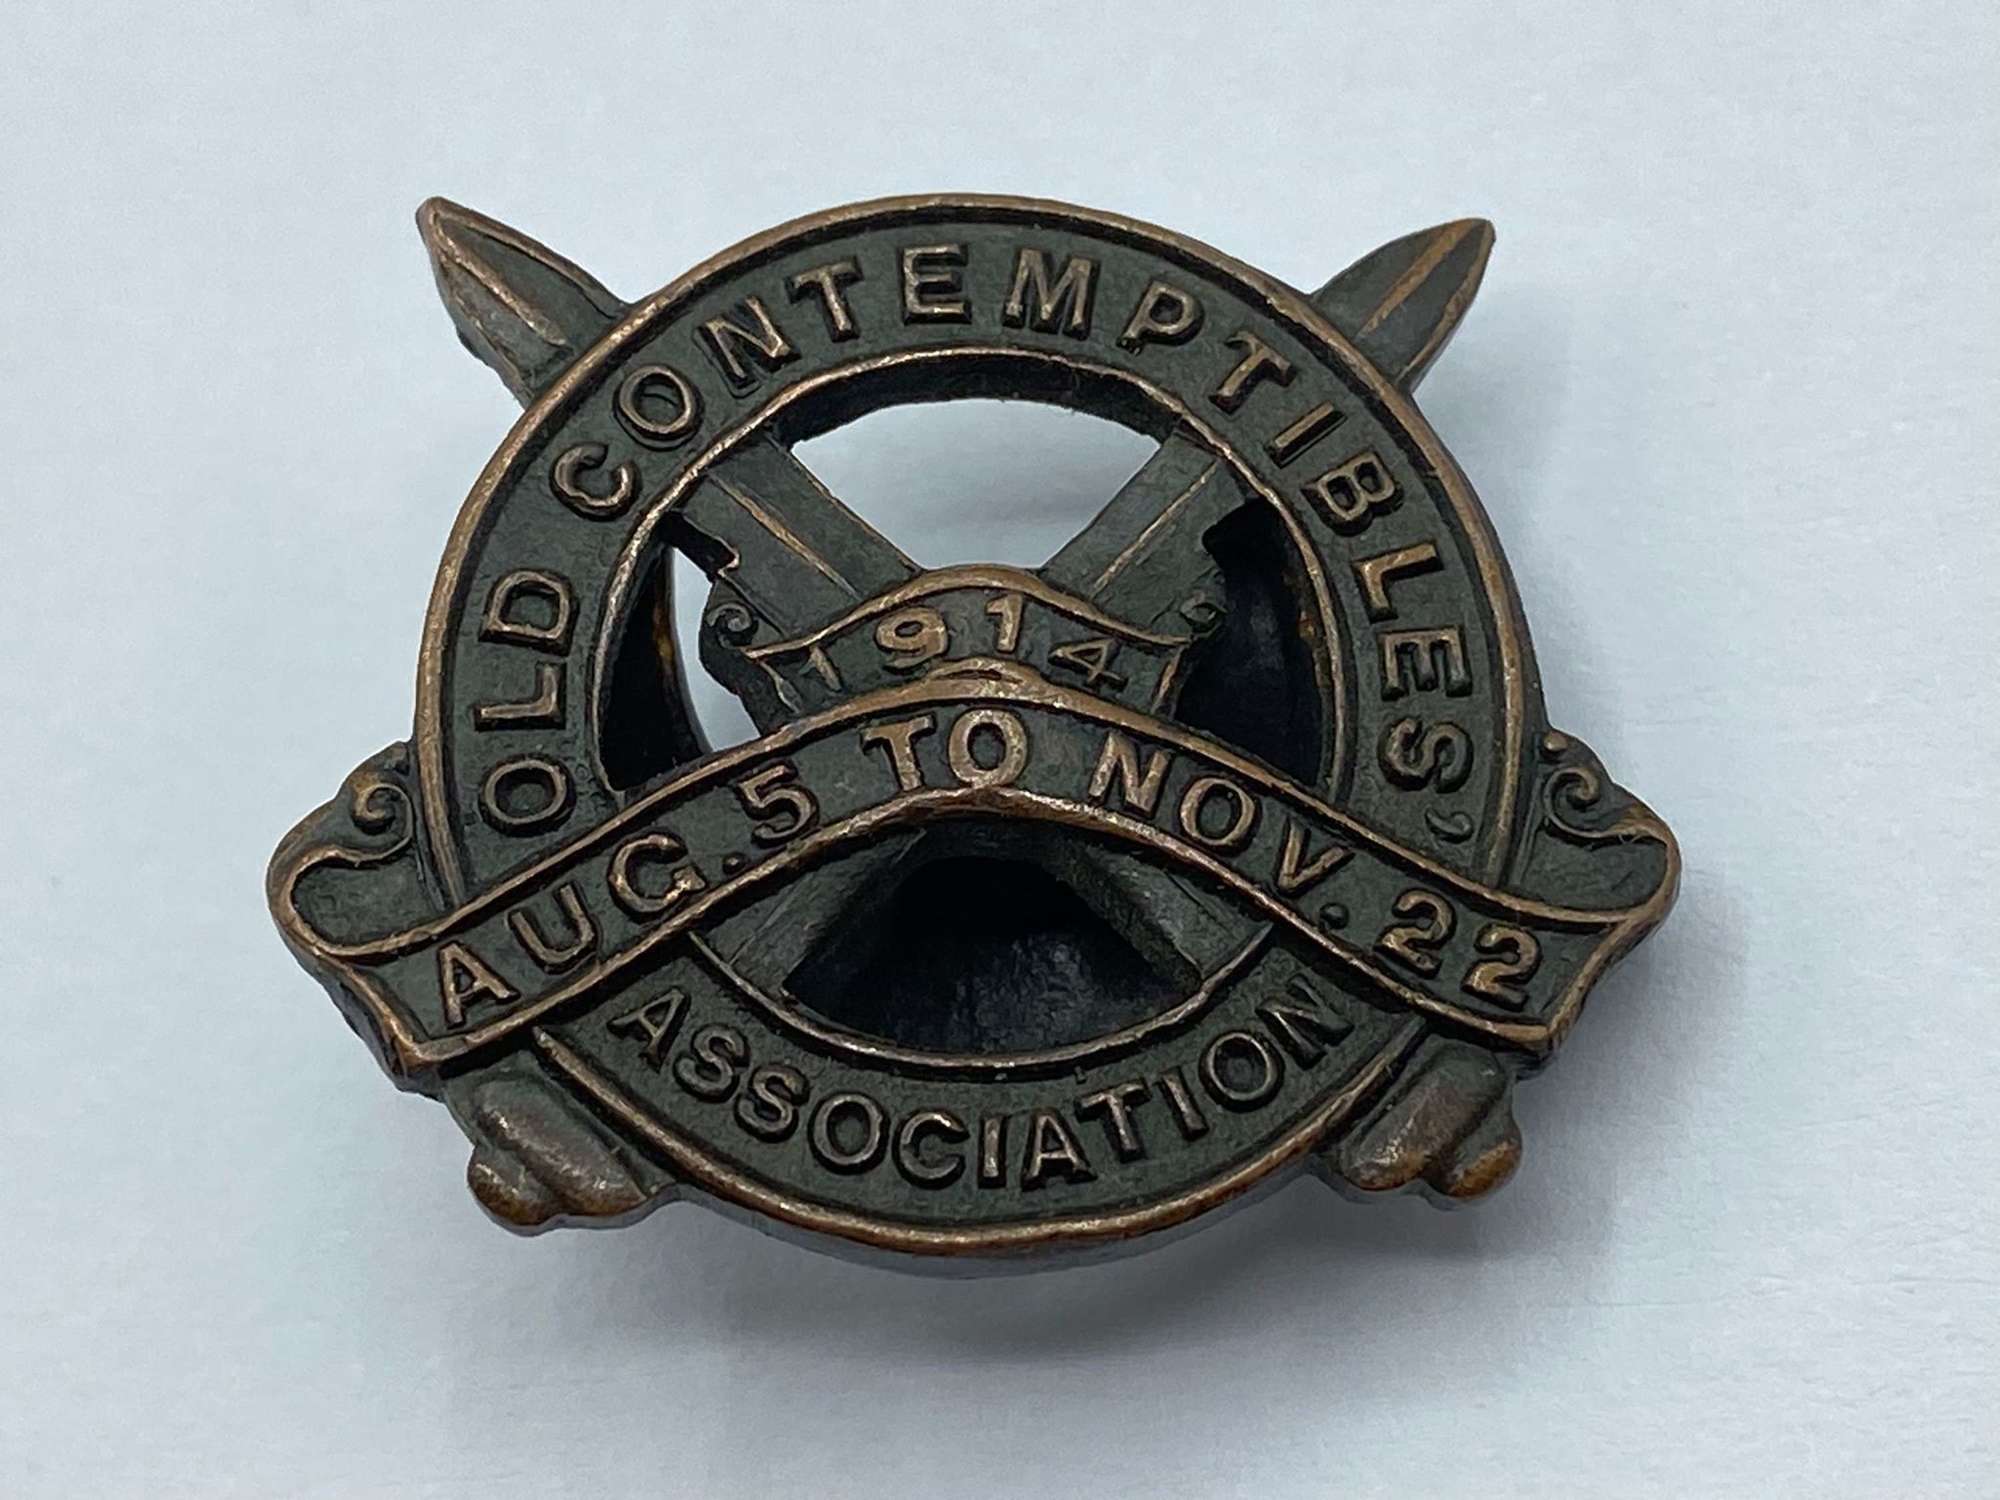 WW1 1914 Old Contemptibles Association Lapel Badge Issue Number 4959D